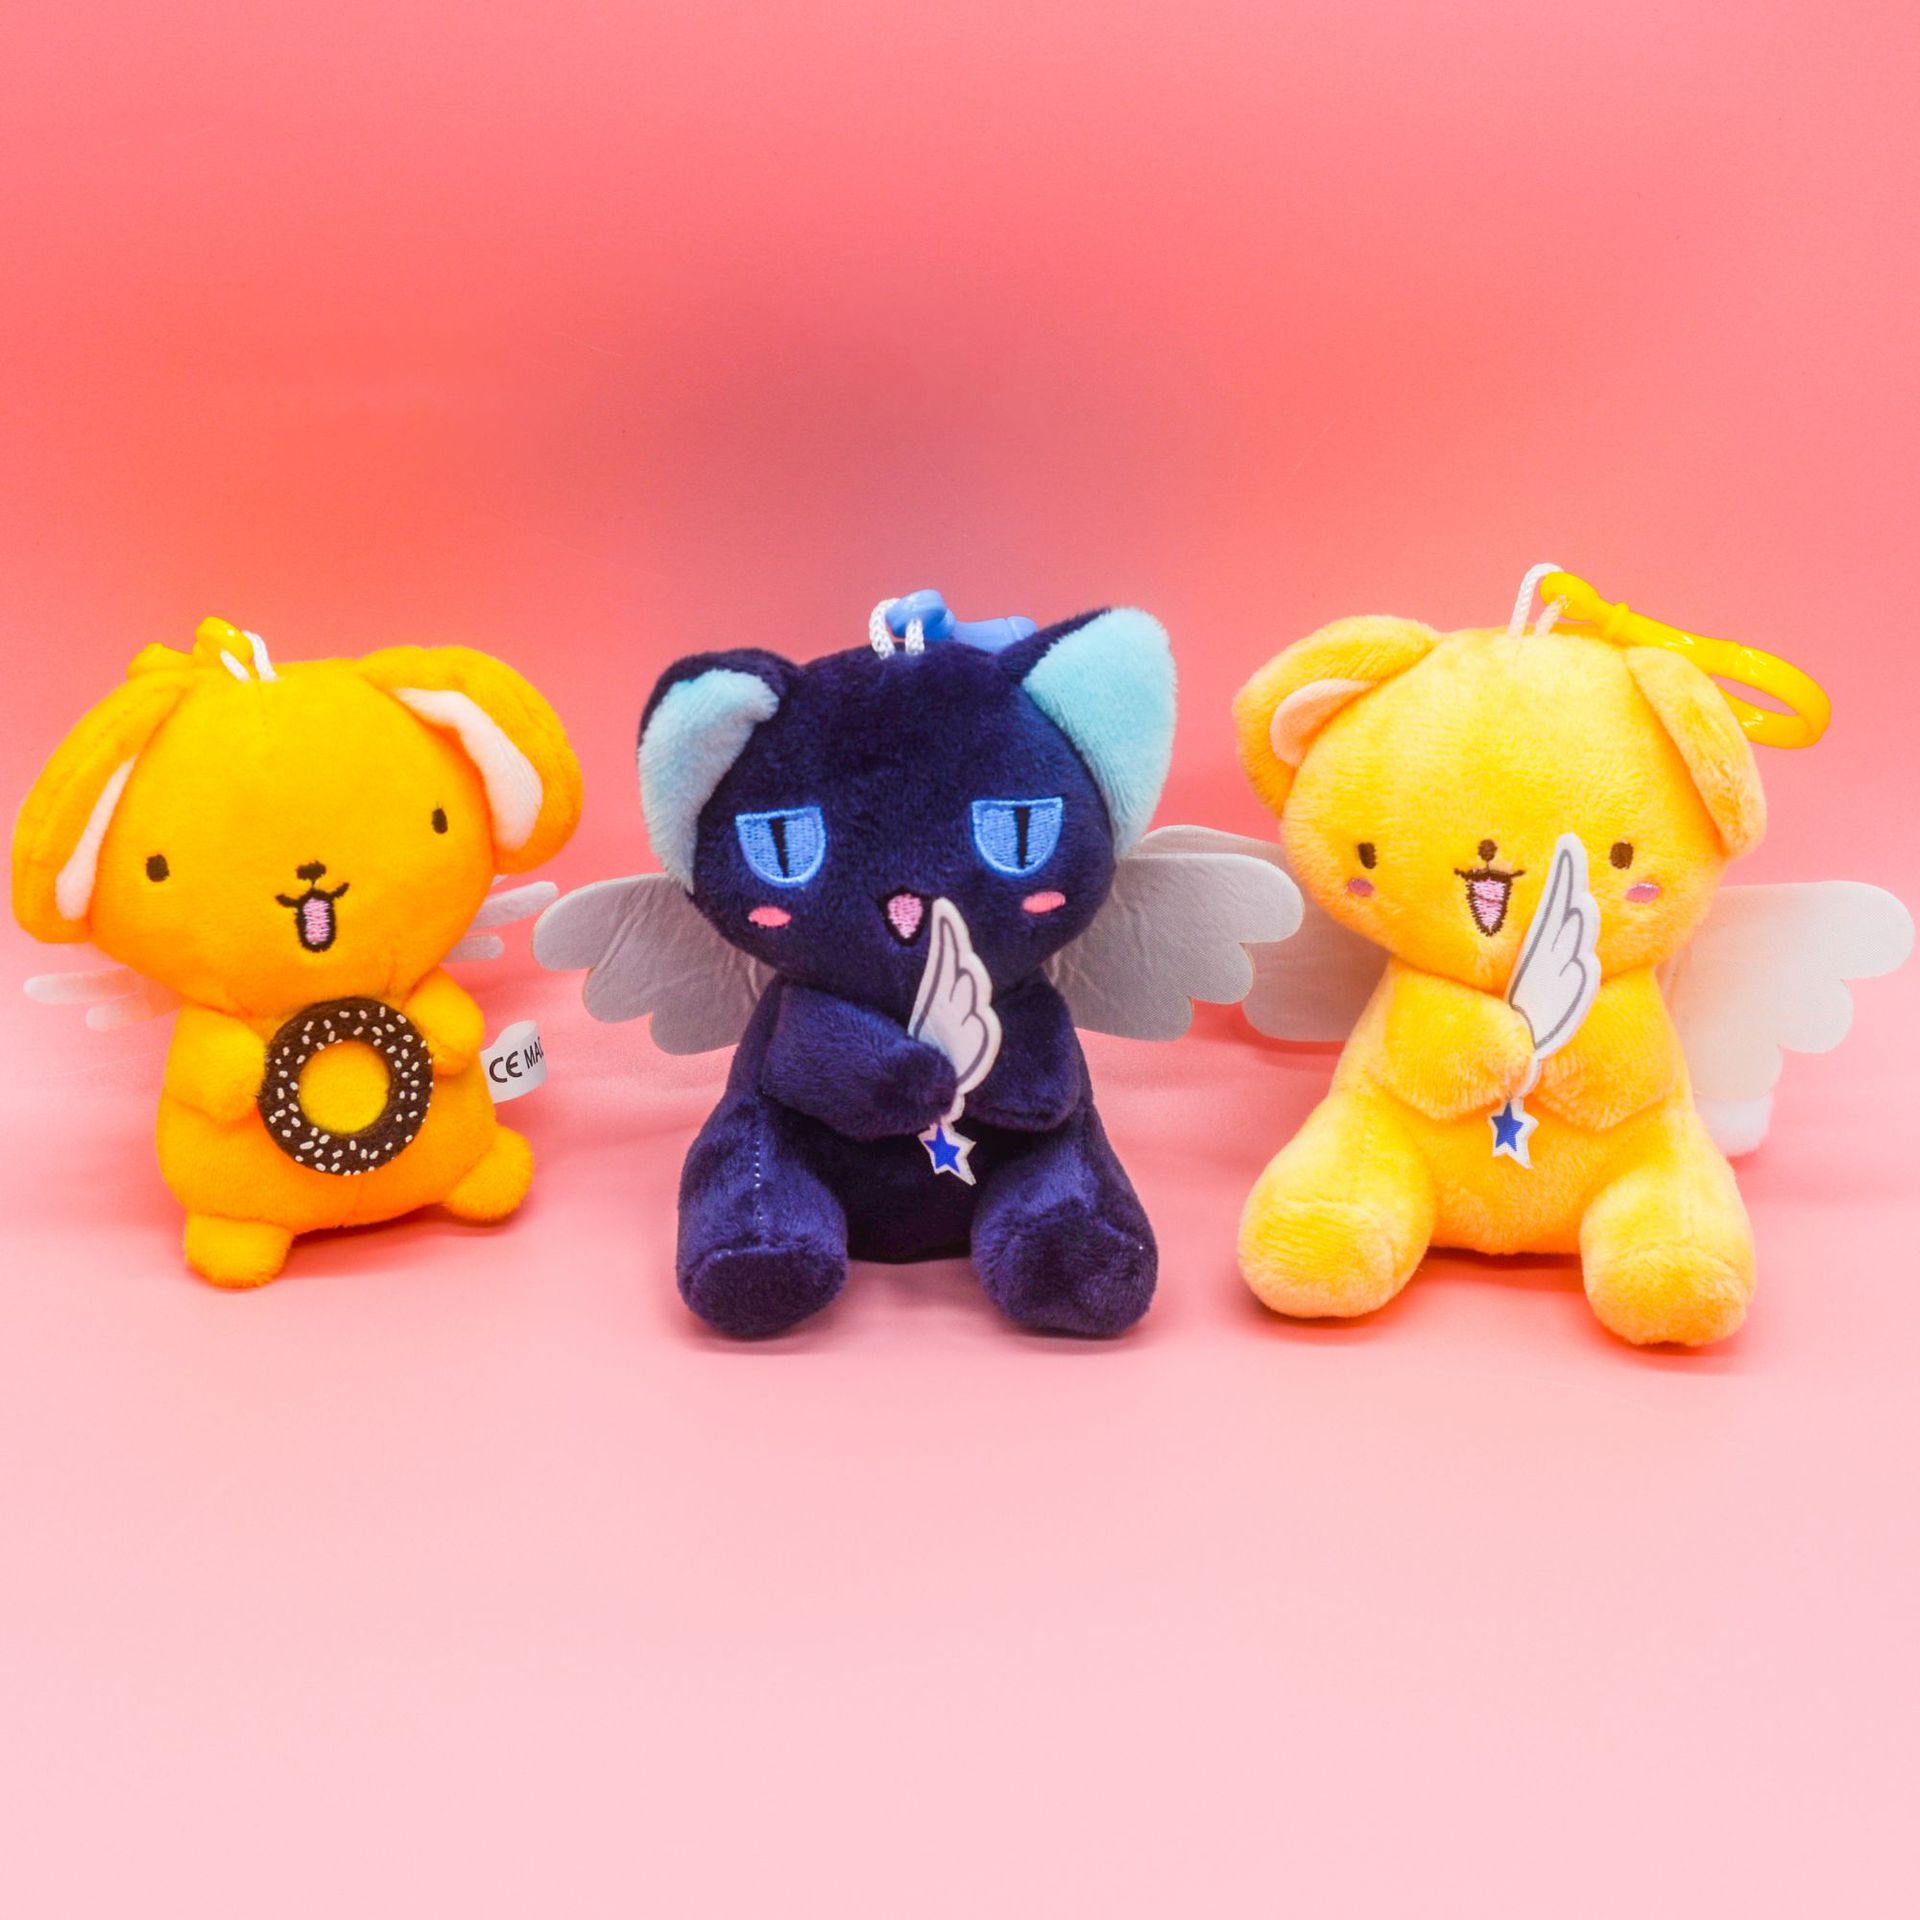 card carptor sakura anime plush doll 10cm price for 1 pcs